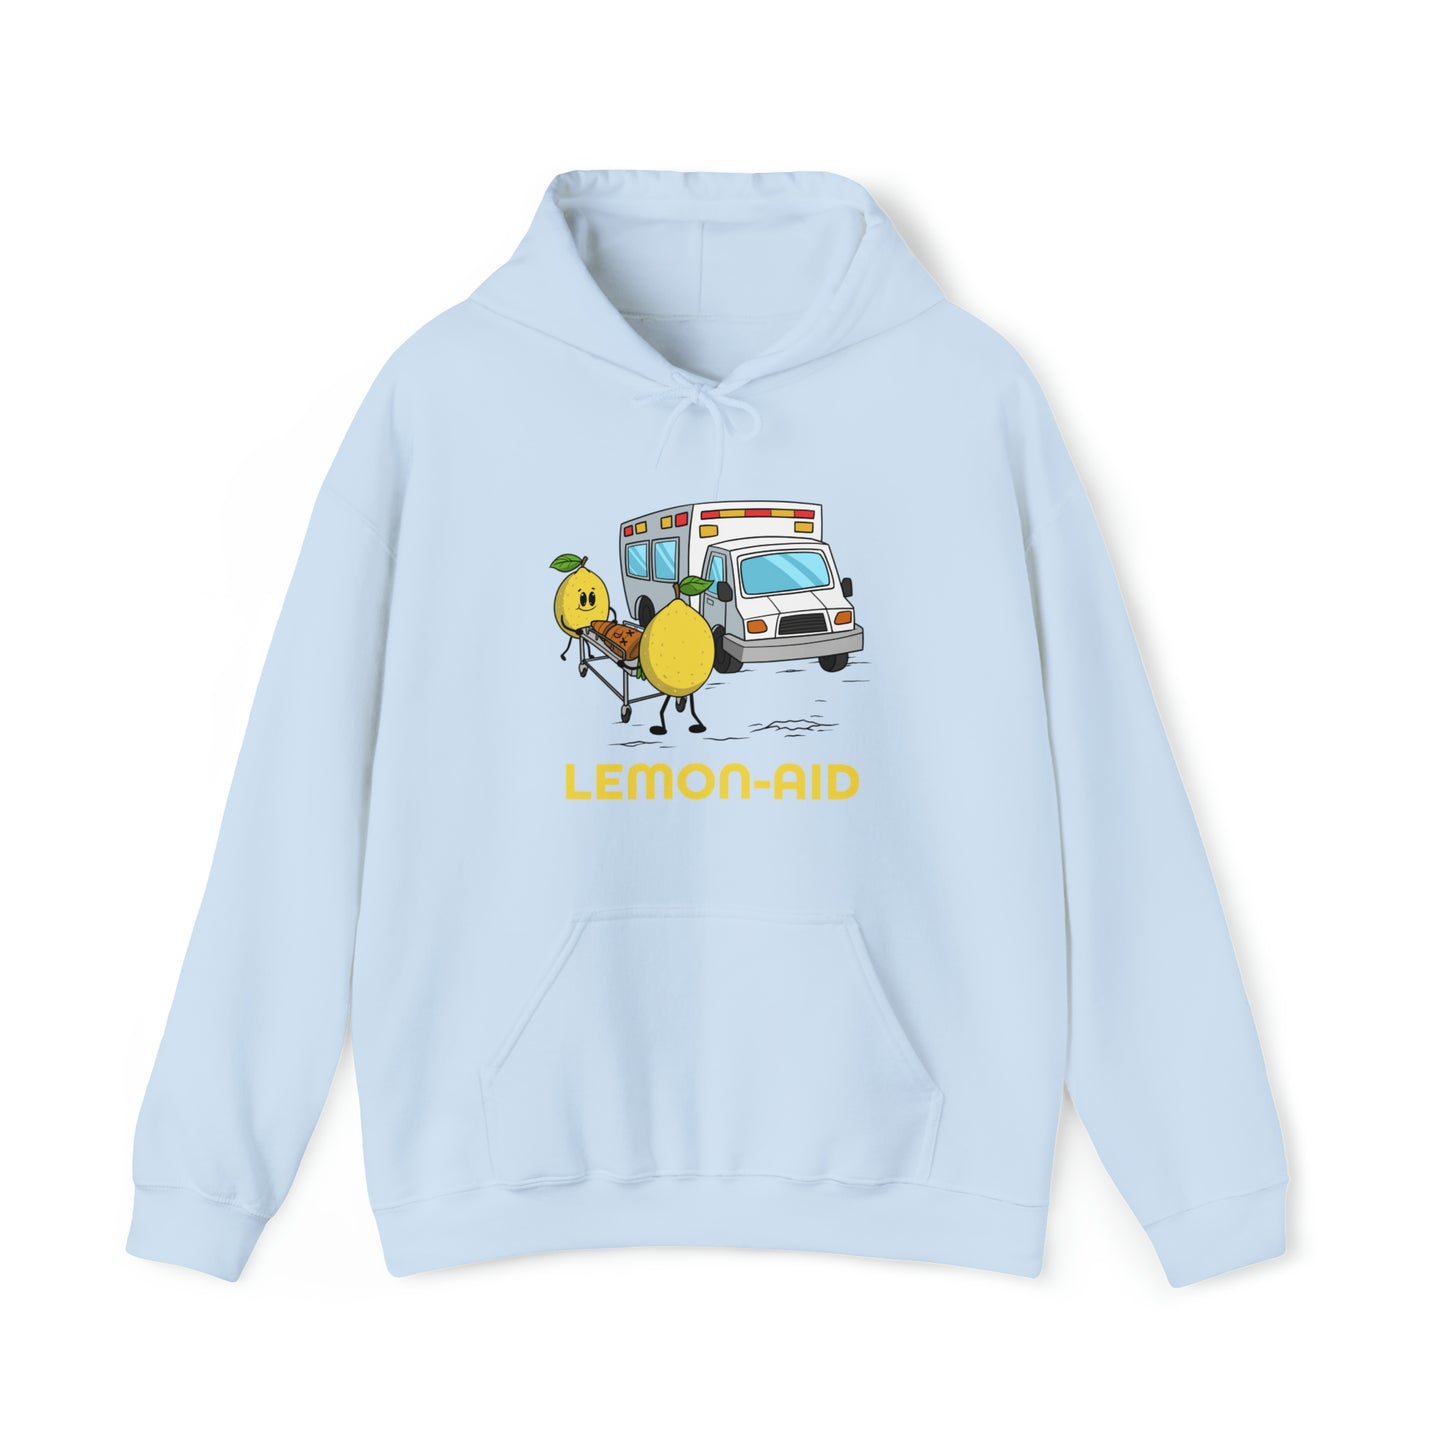 Custom Parody Hooded Sweatshirt, Lemon-aid design